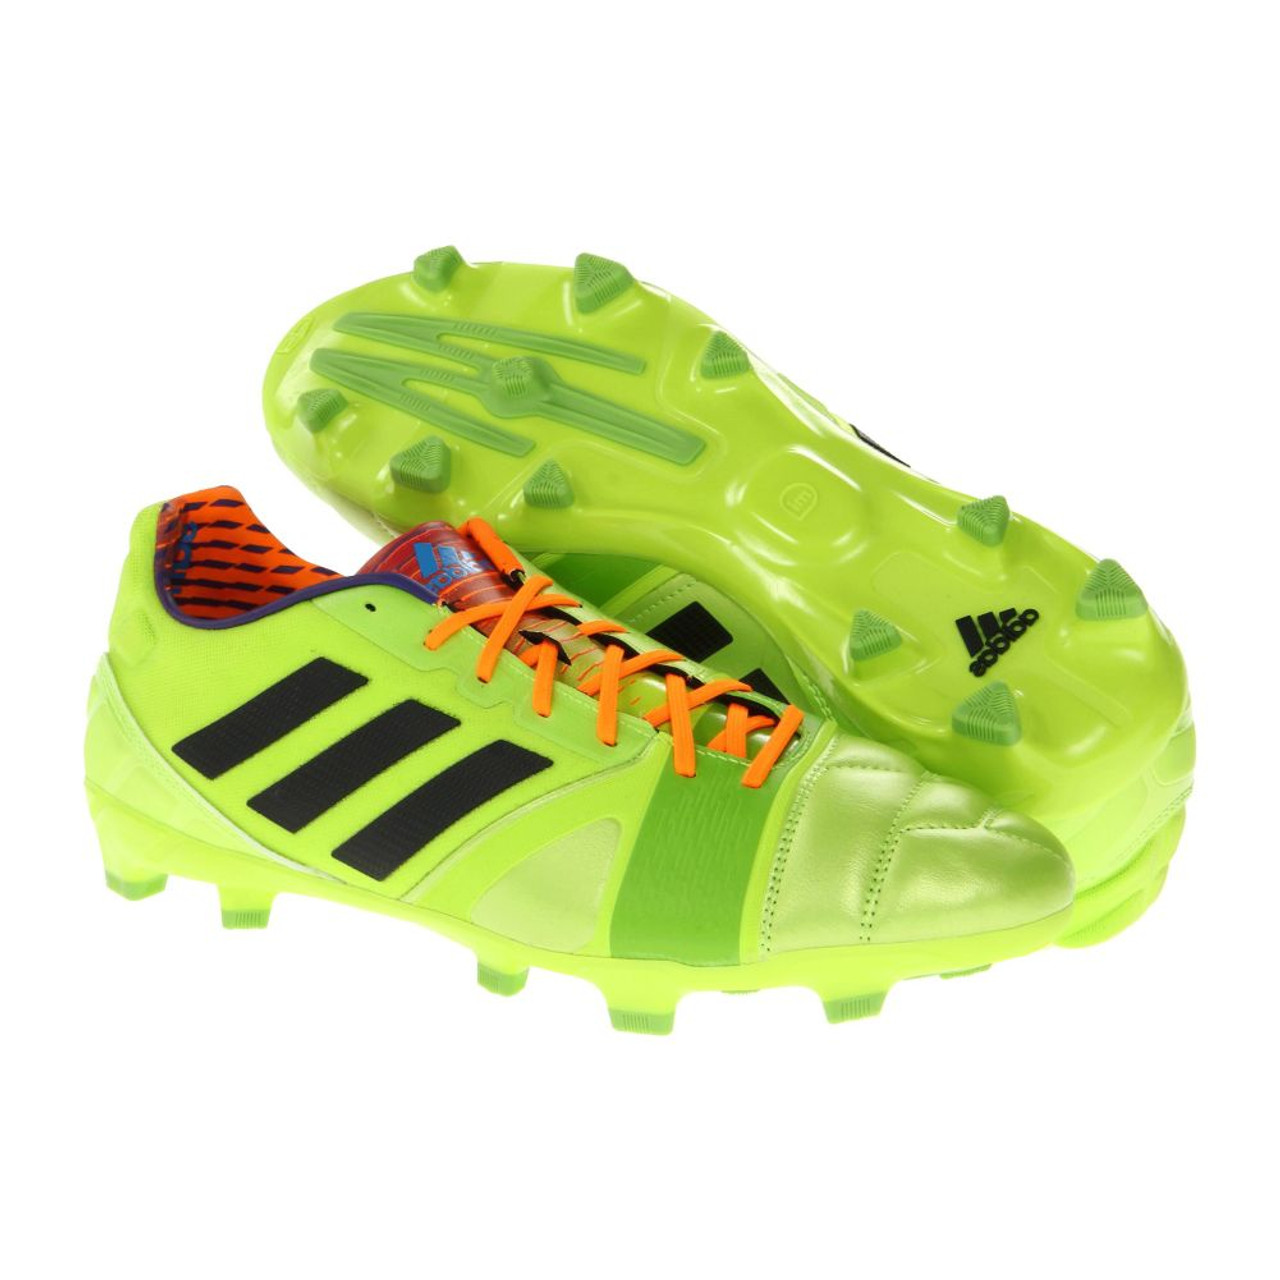 prieel Samenhangend Dochter Adidas Men's Nitrocharge 2.0 TRX FG Soccer Cleats - Solar Slime | Discount  Adidas Men's Athletic Shoes & More - Shoolu.com | Shoolu.com